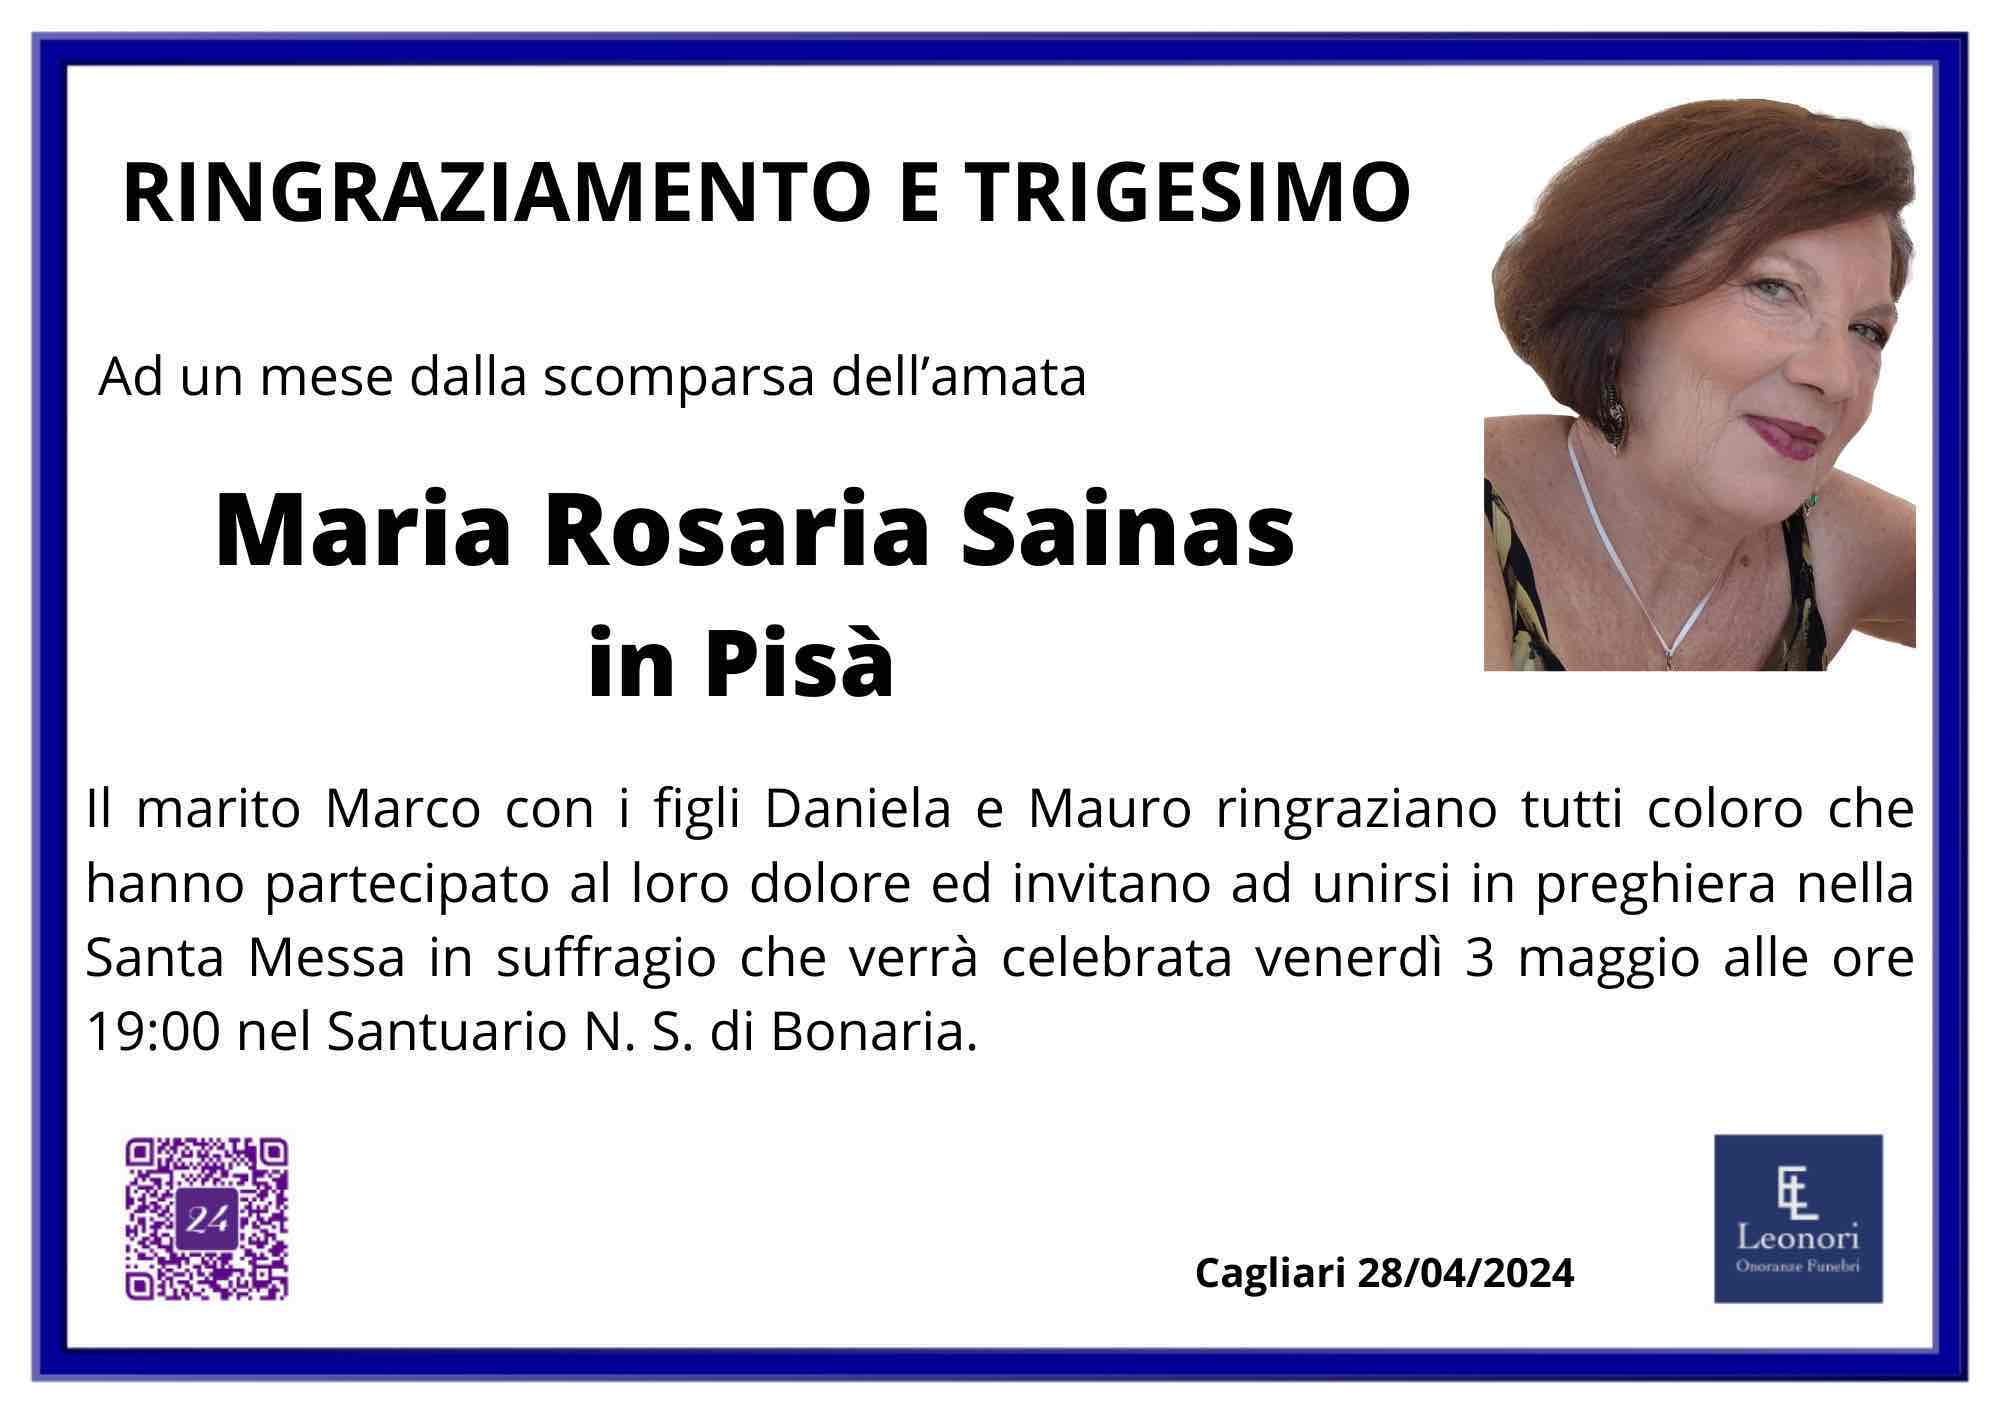 Maria Rosaria Sainas